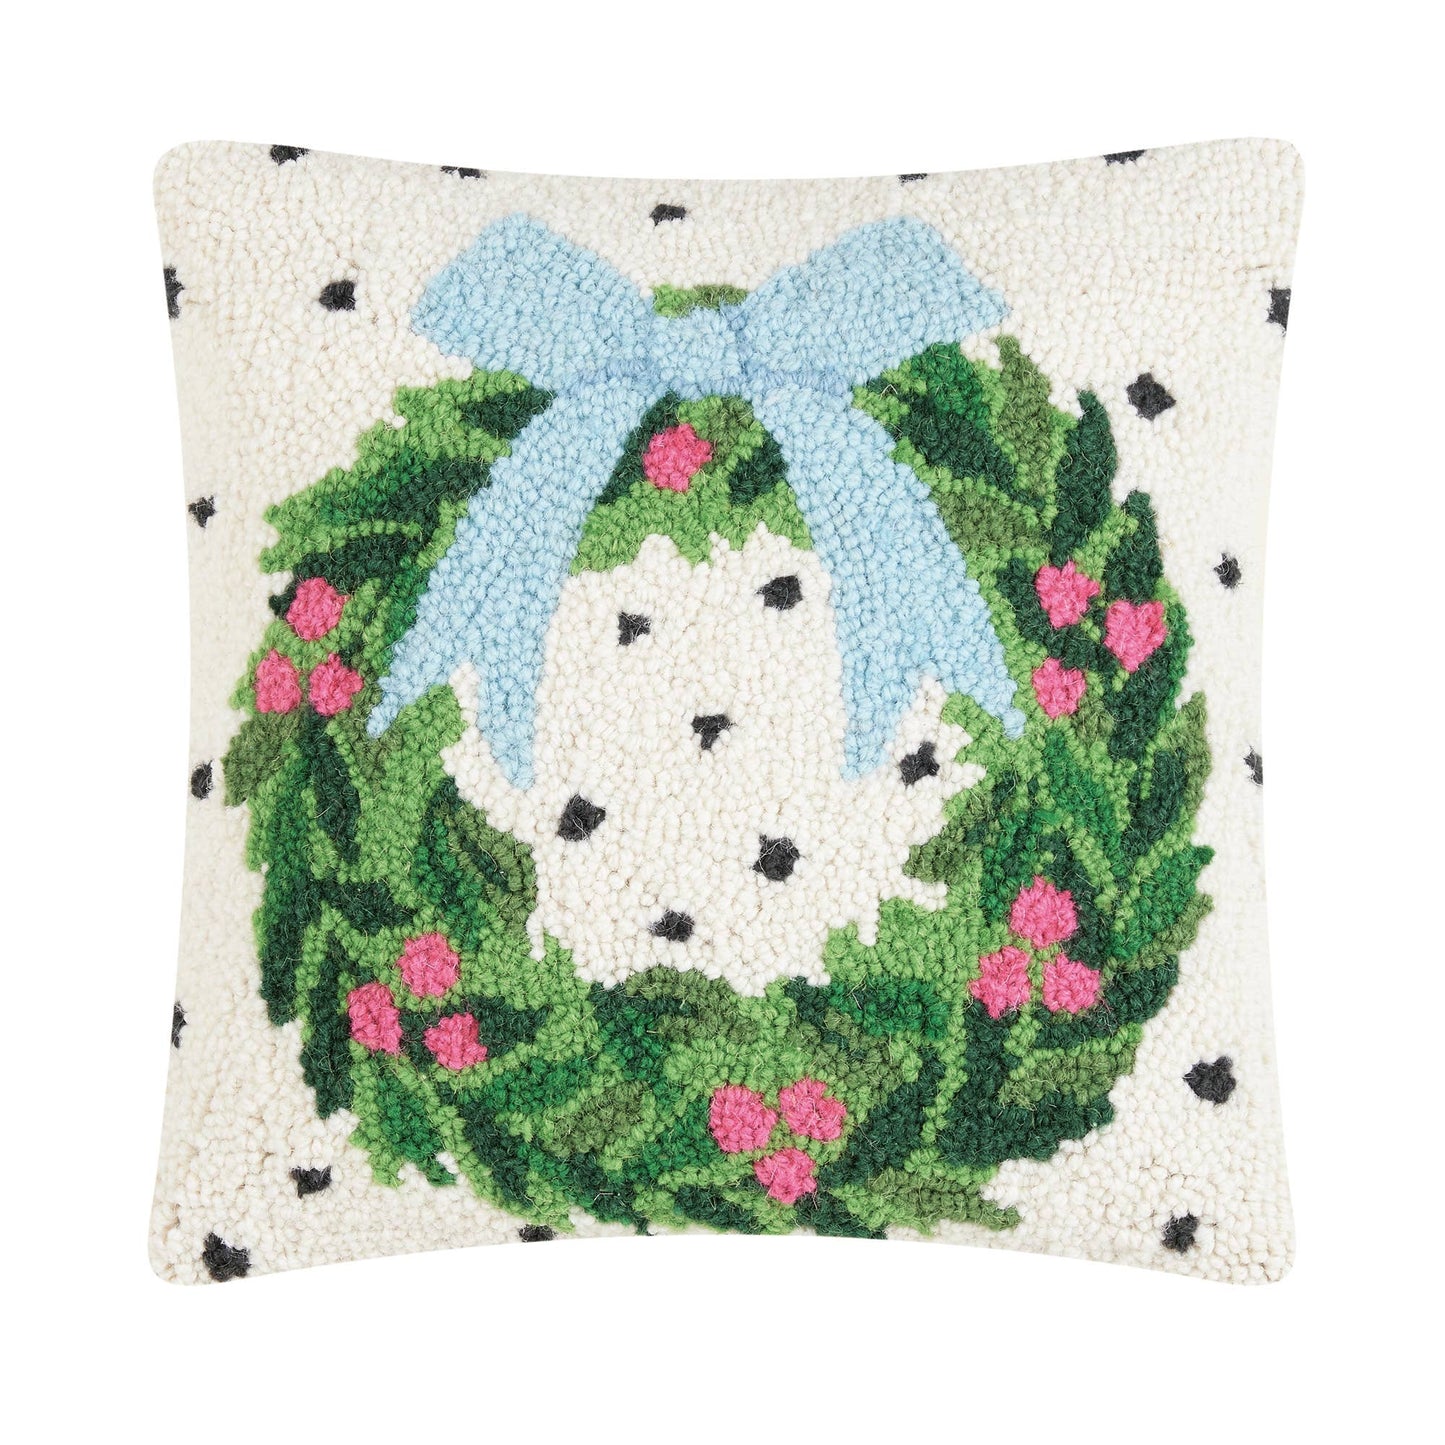 Holiday Wreath Hook Pillow